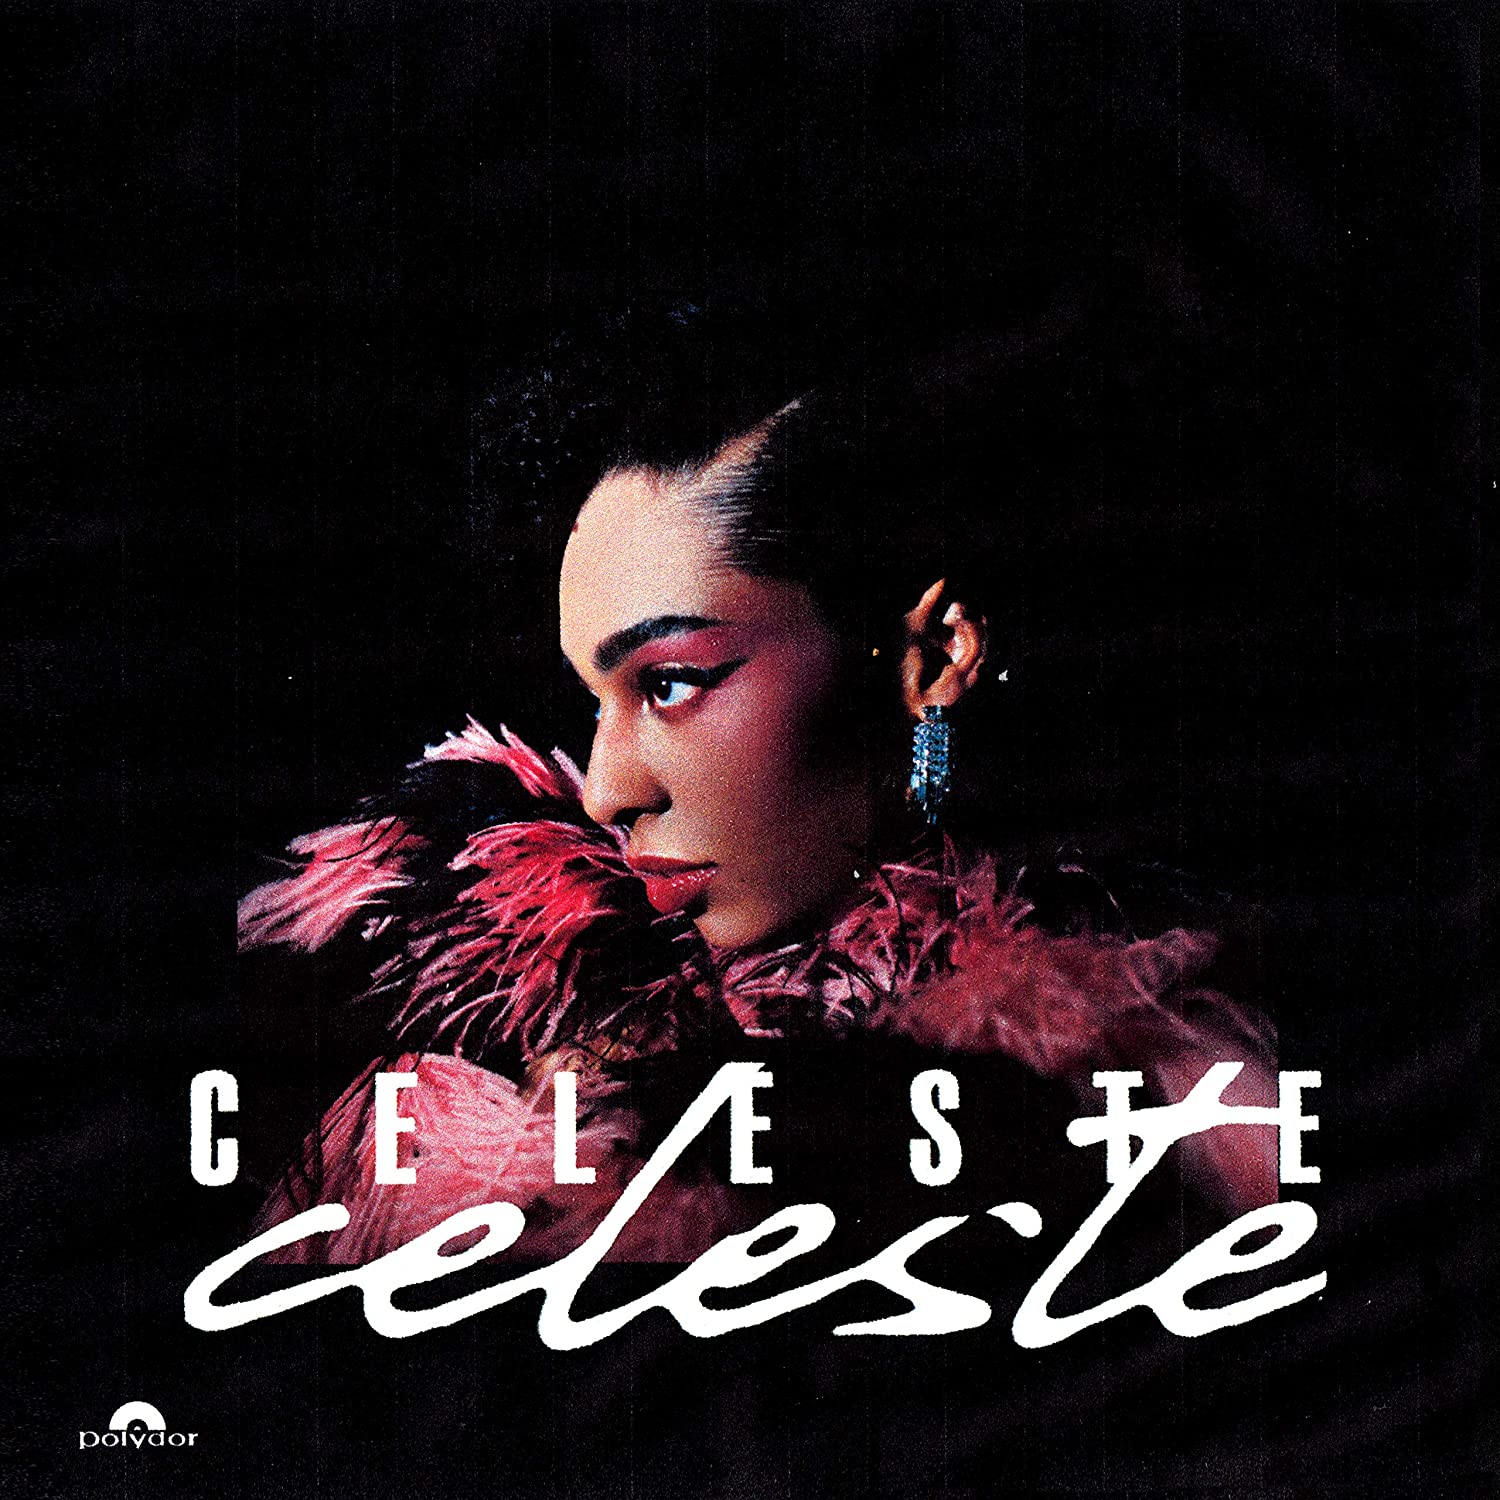 Celeste Celeste Reviews Album Of The Year